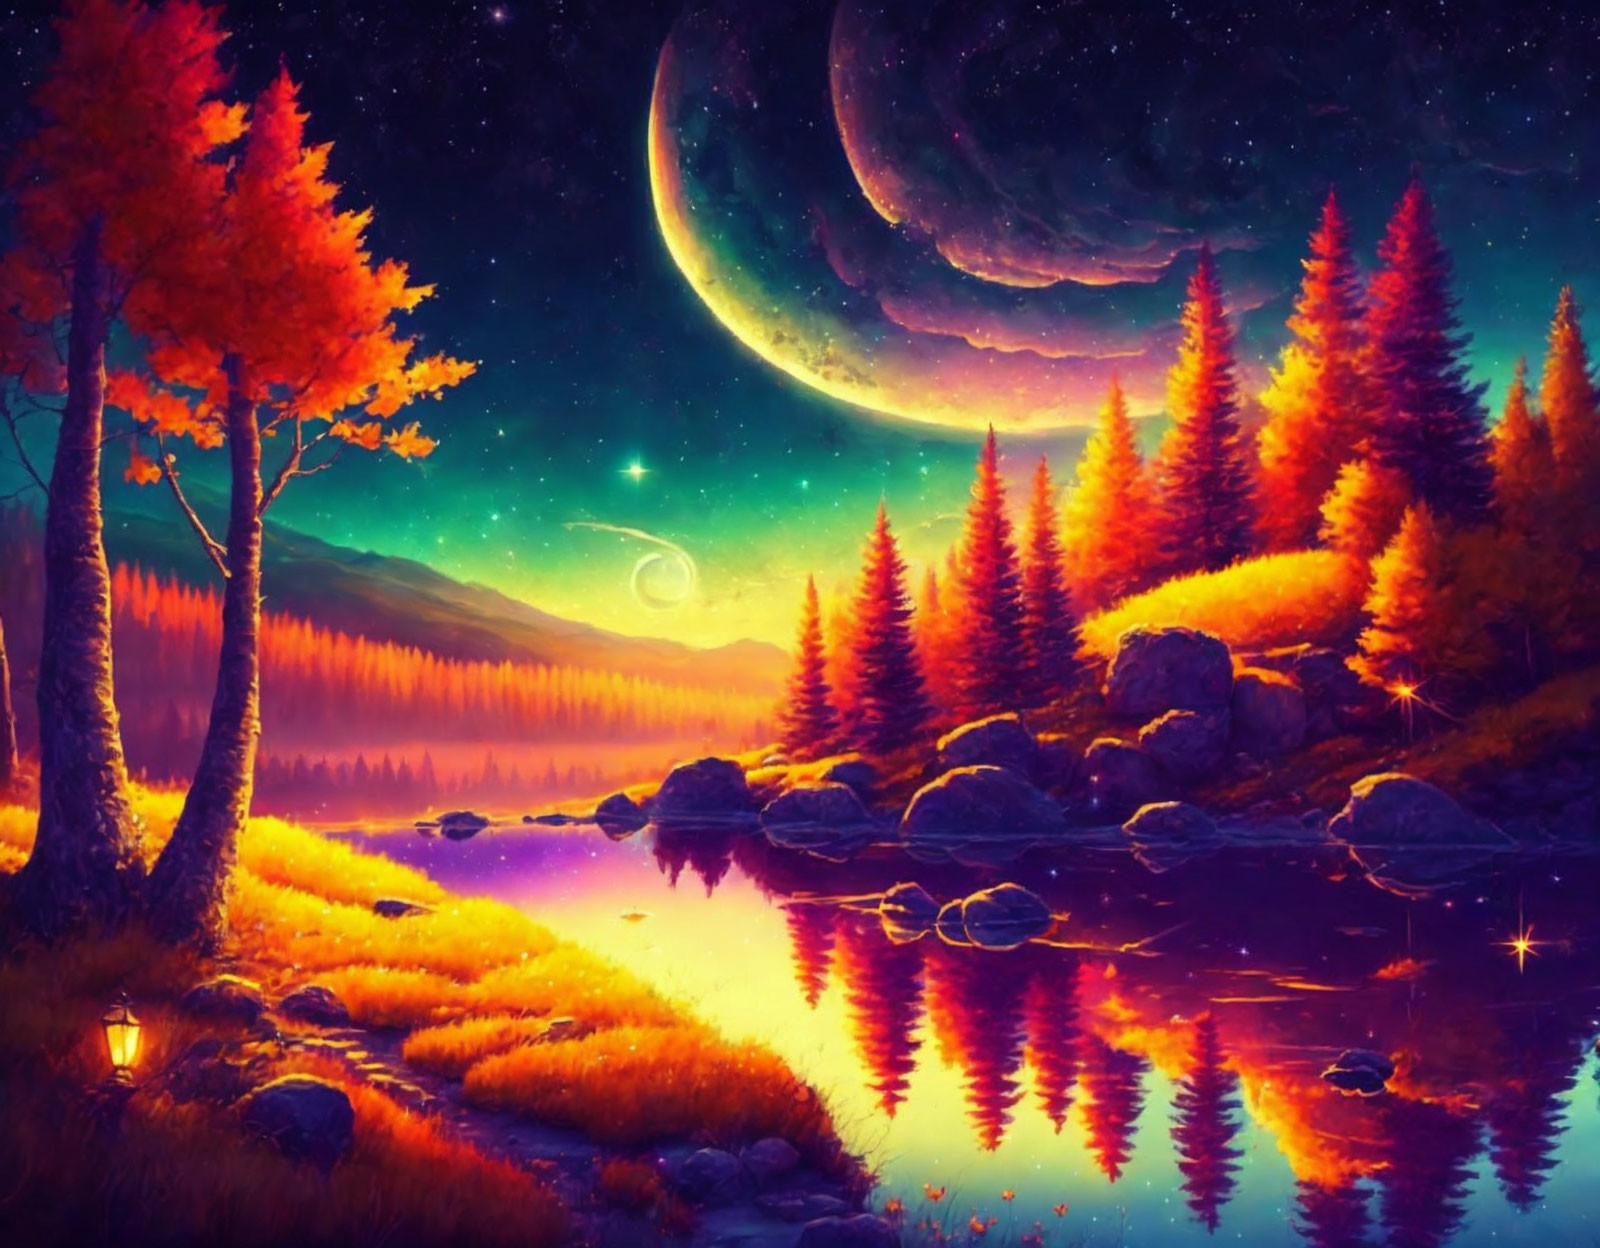 Vibrant fantasy night landscape with large moon, luminous autumn trees, reflective lake, and twink